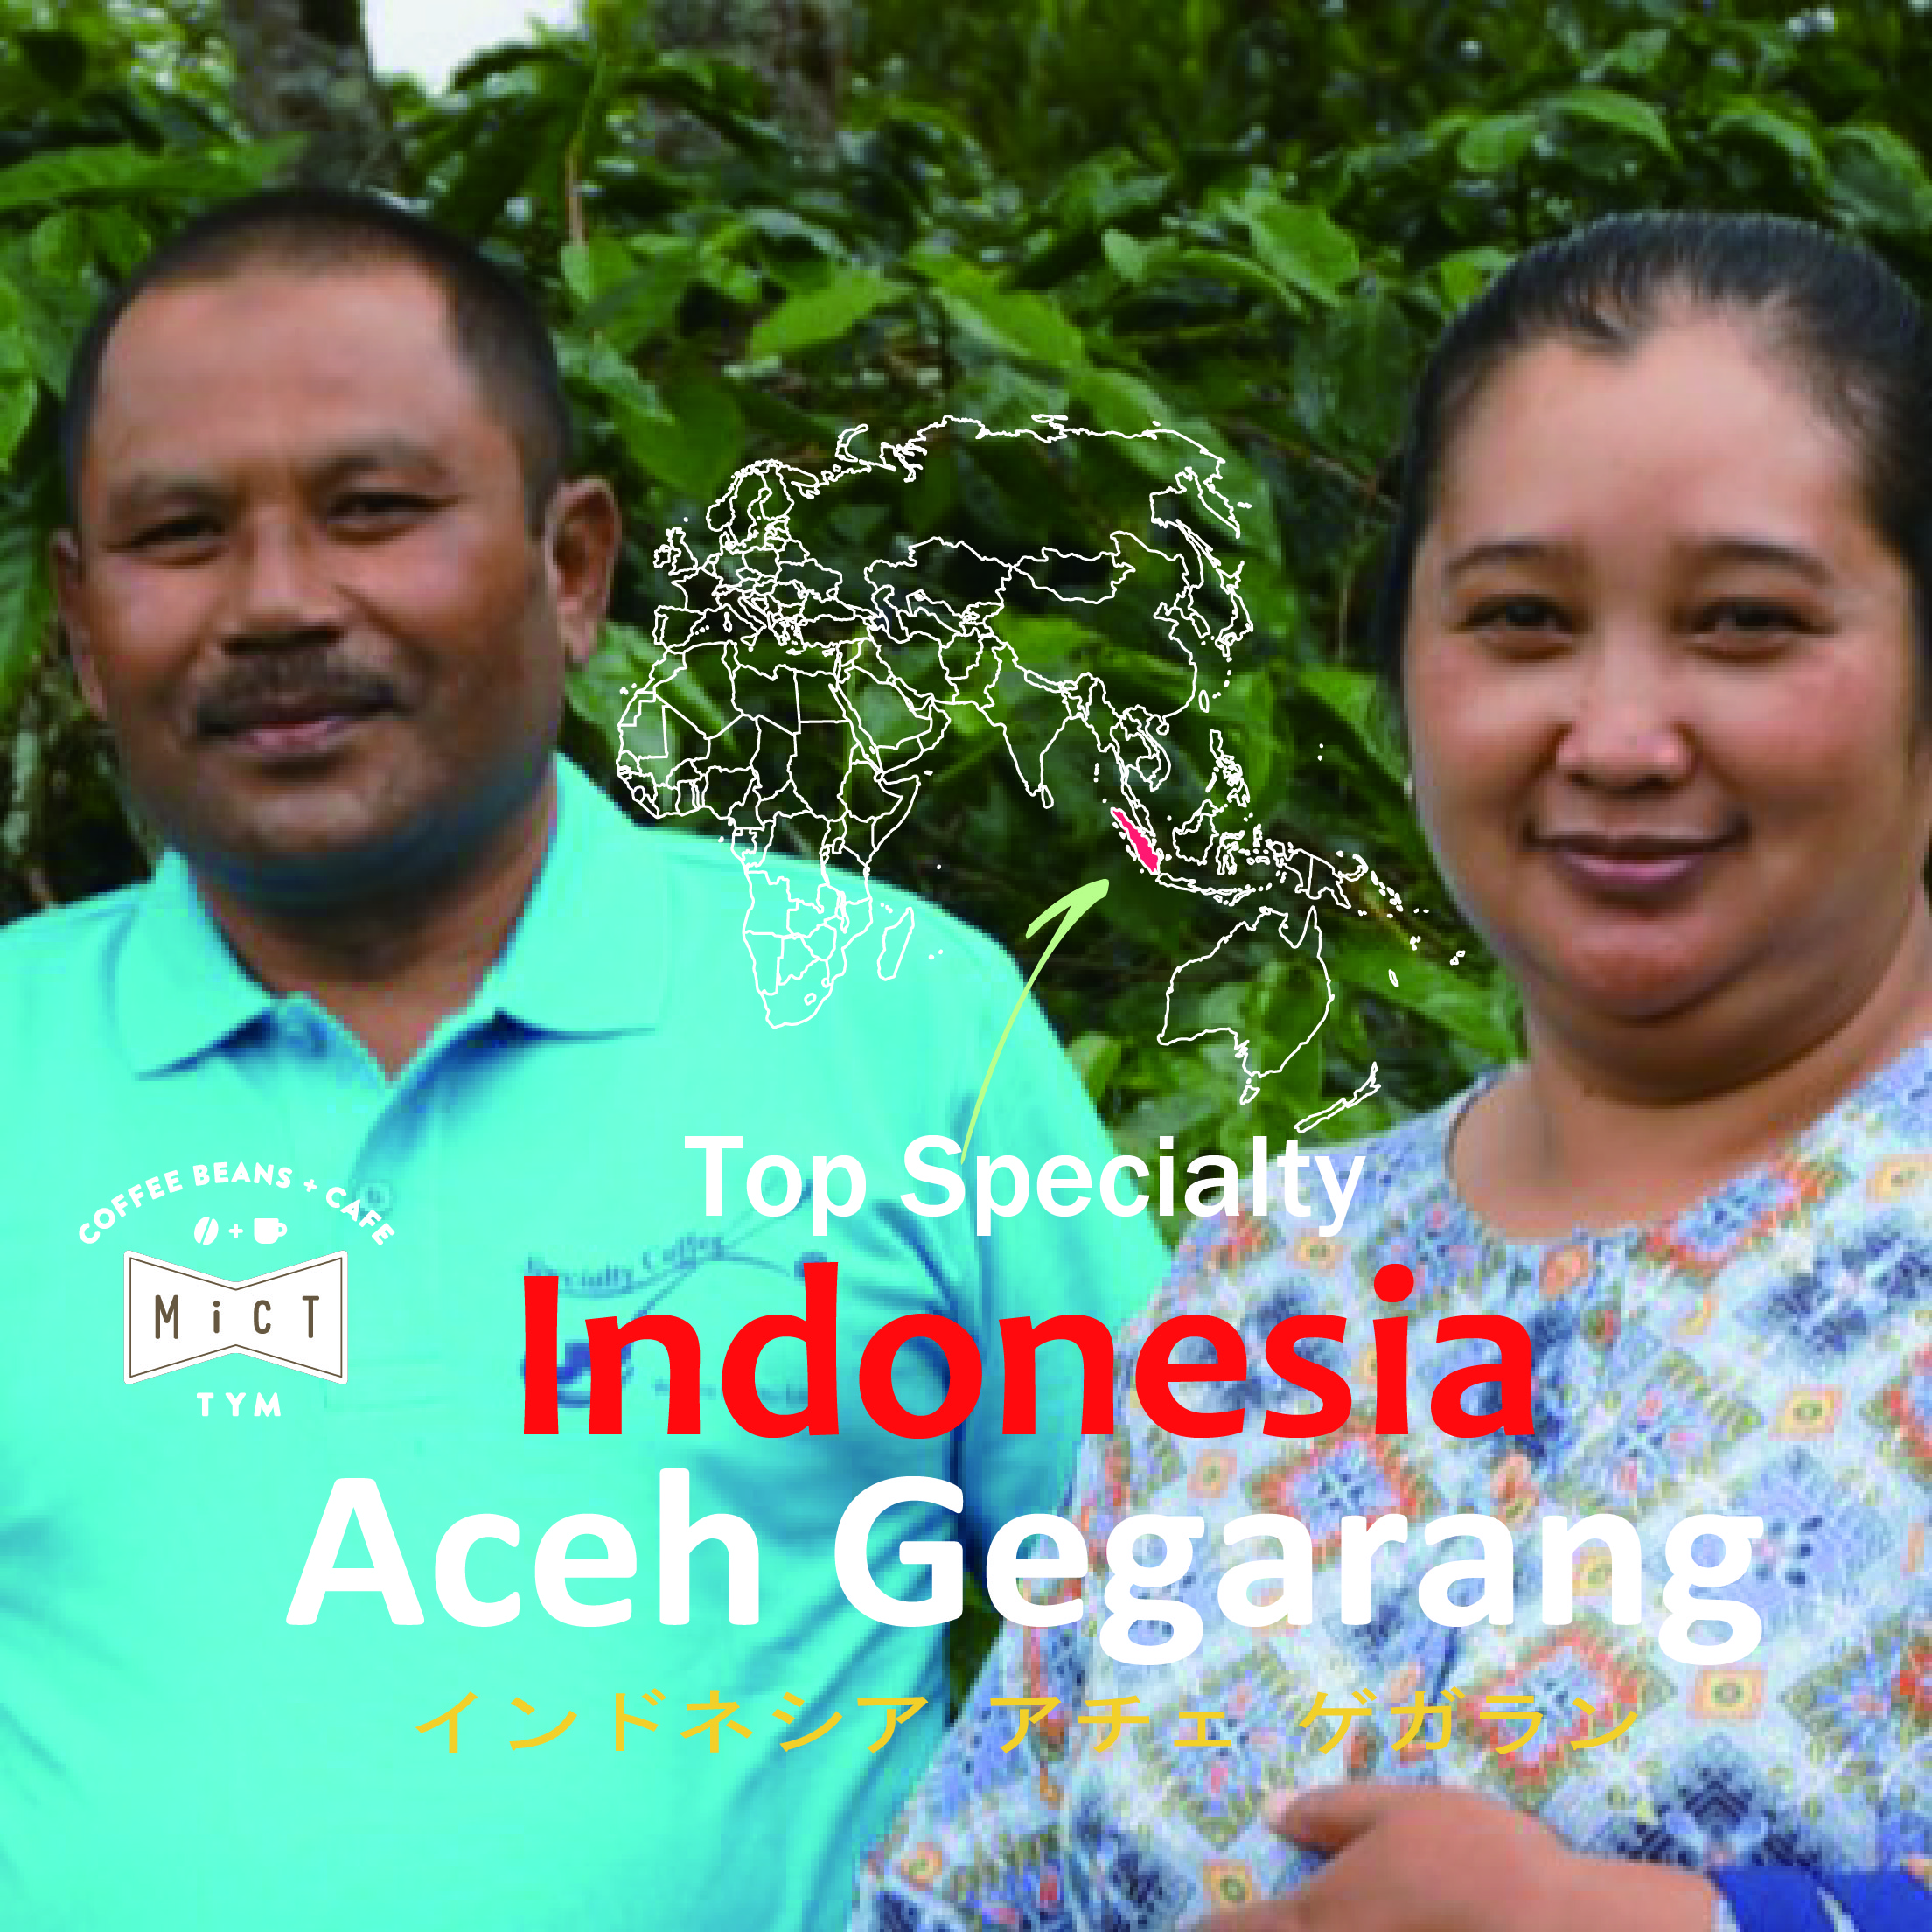 《Top Specialty》インドネシア アチェ ゲガラン